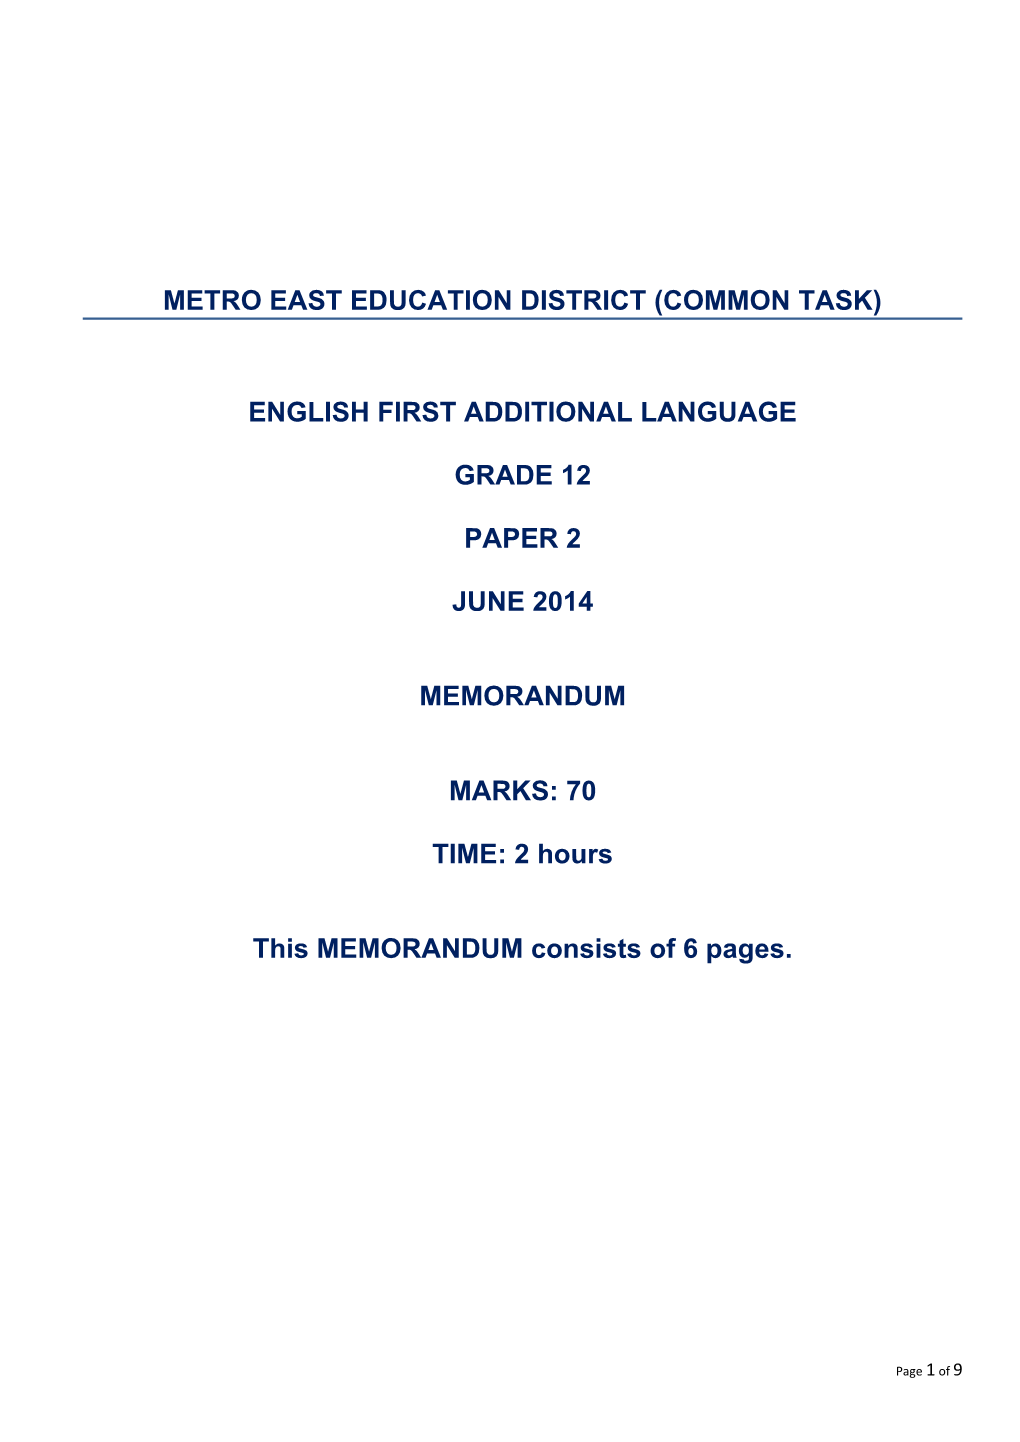 Metro East Education District (Common Task)